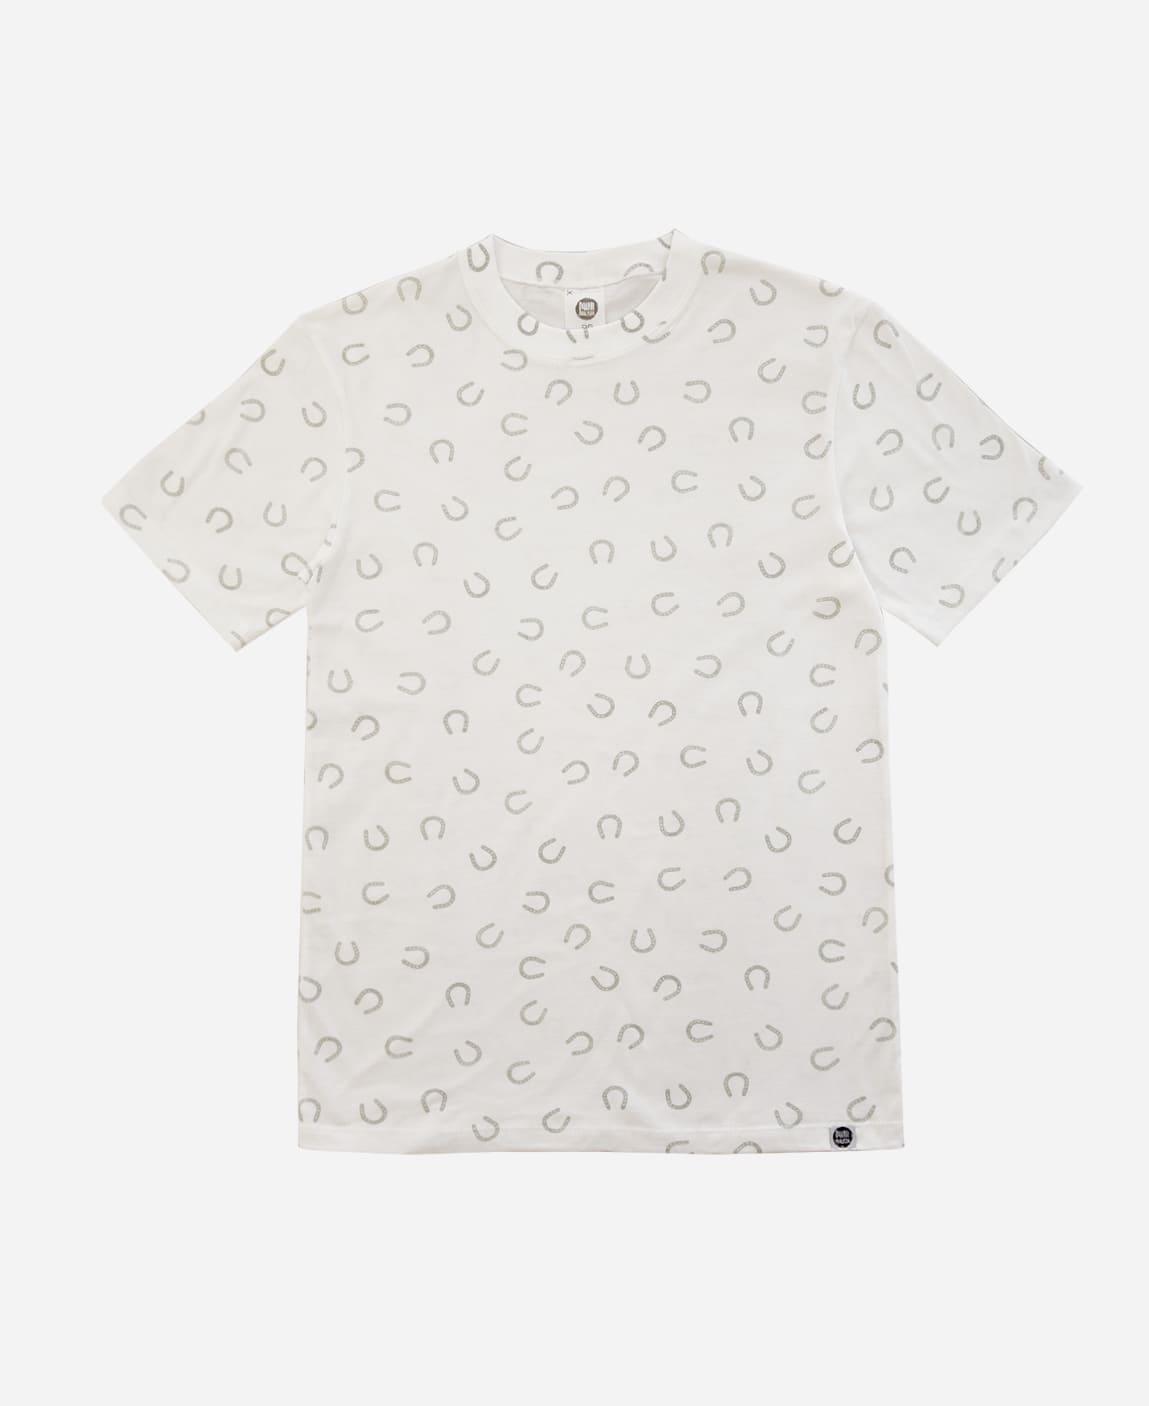 Camiseta Adulto Unissex Lucky - MiniMalista Baby - b2b, com-desconto-mm10, Meia Estação, Menino, minime, new, tab-tam-cam-adulto-2 -bebê-minimalista-estiloso